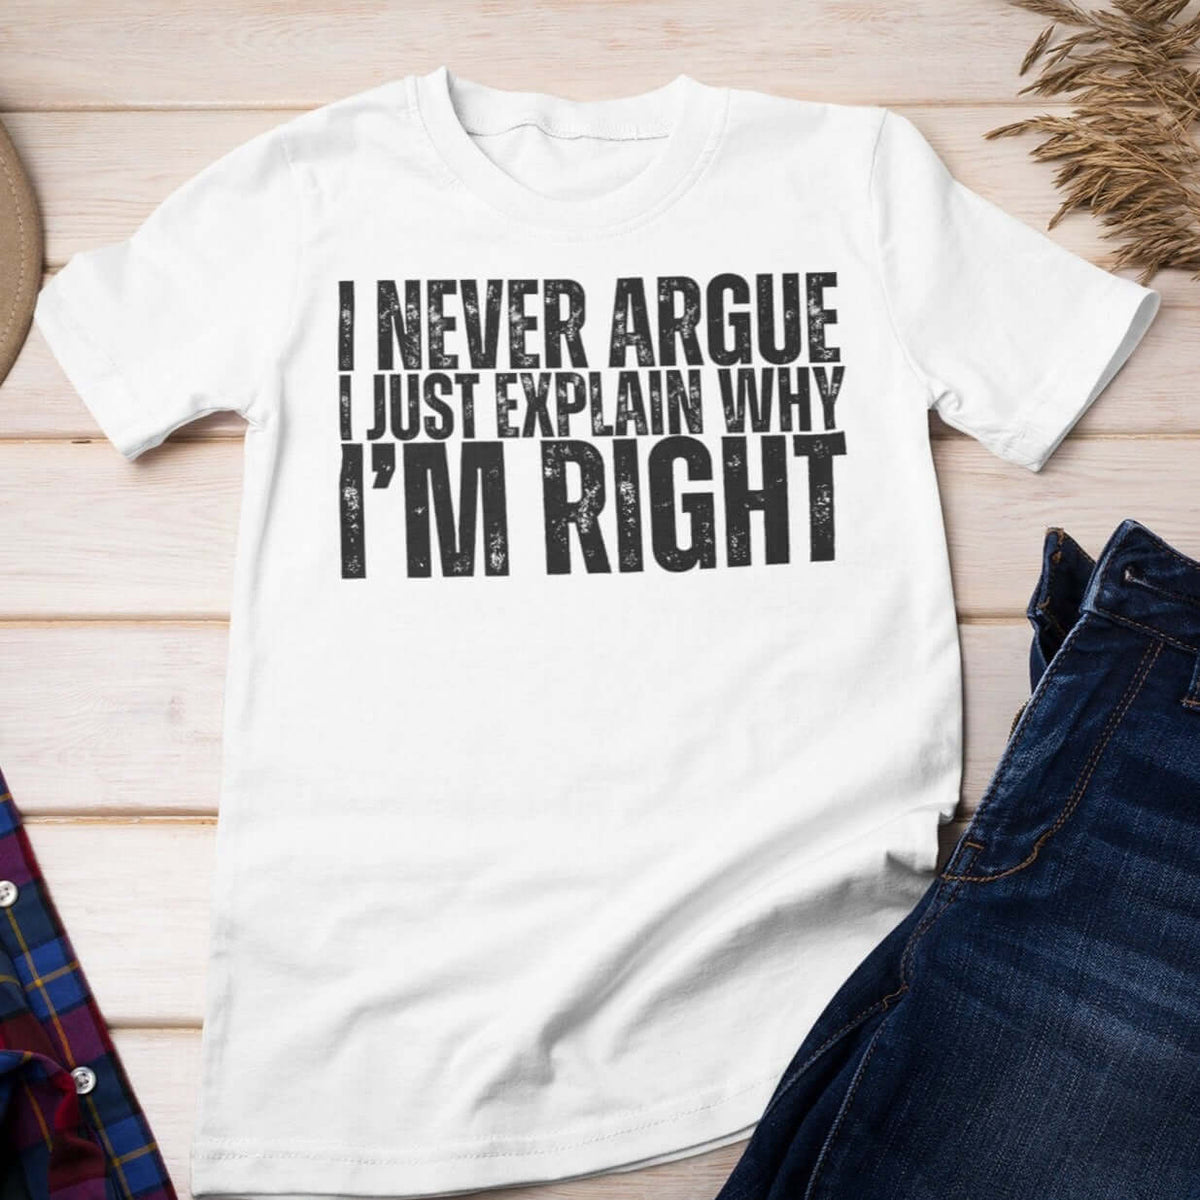  Funny T-Shirt, Why I'm Righ, Novelty Tee, Sarcastic Shirt, Grumpy Old Git, Teen Shirt,  Moody Teenage, Boy Girl Argue, Dad Son Shirt, Sarcasm Shirt, Mom Shirt, Dad Shirt, Gift for him